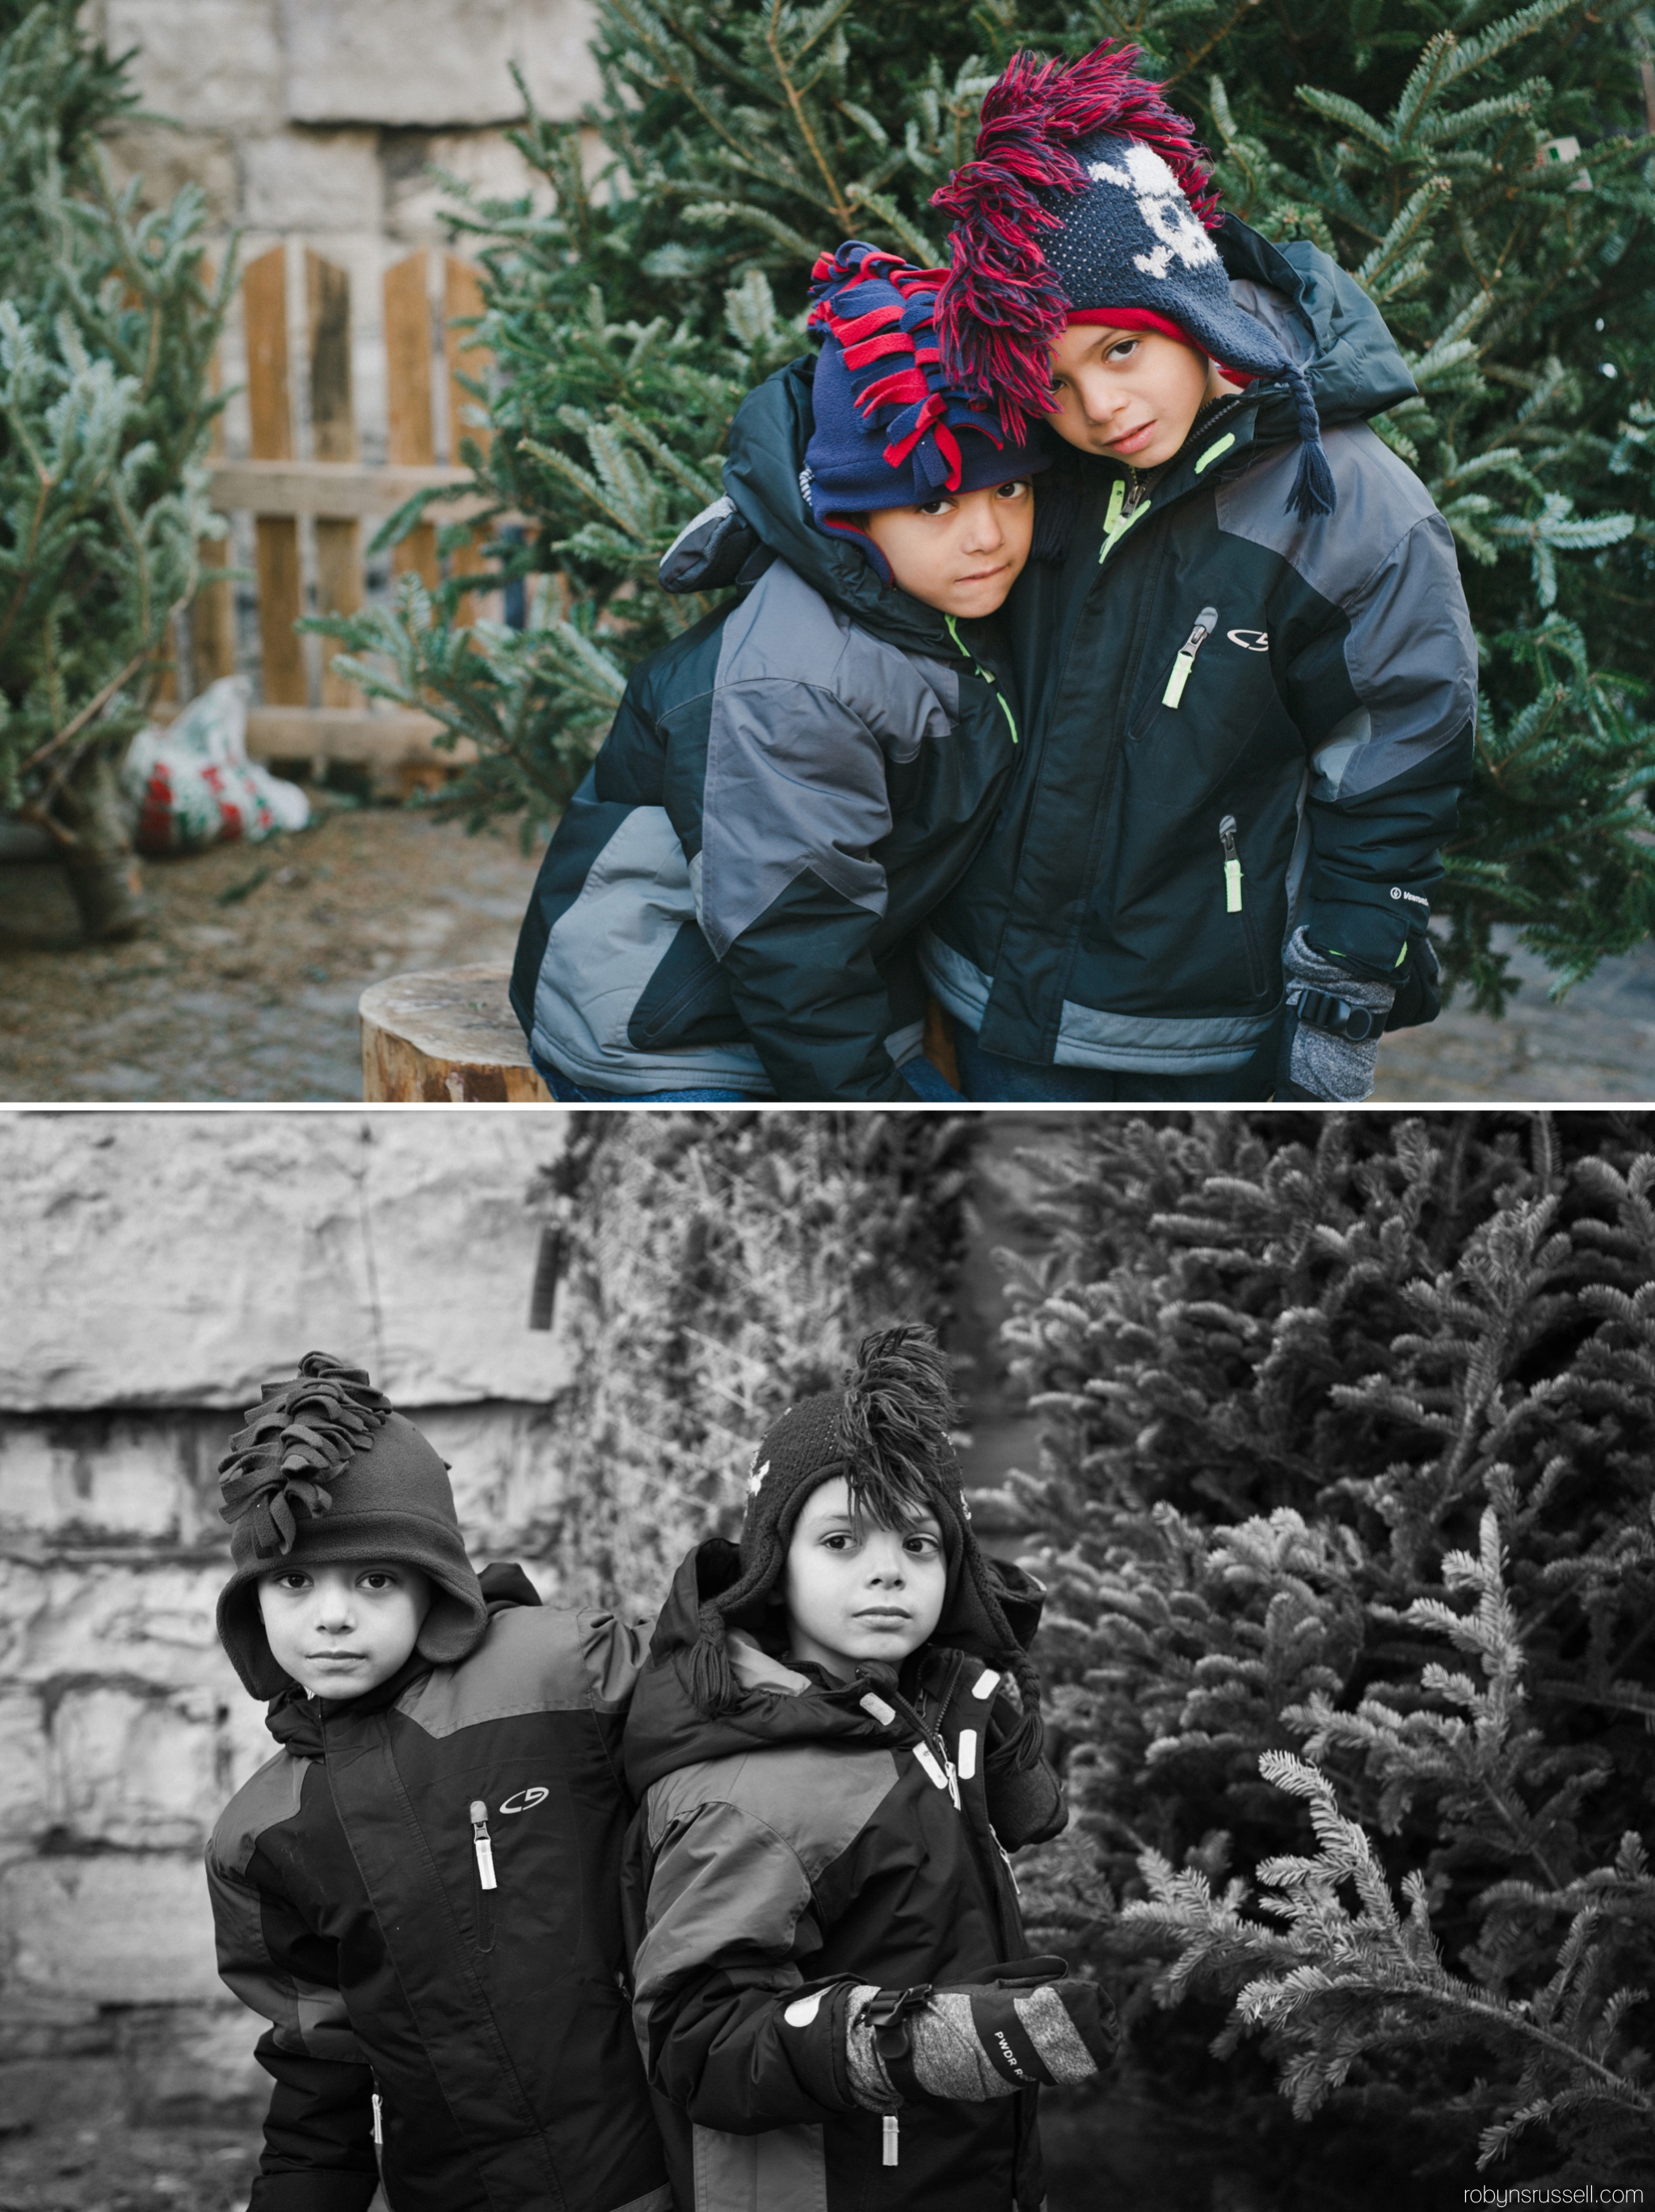 21-boys-by-christmas-trees.jpg